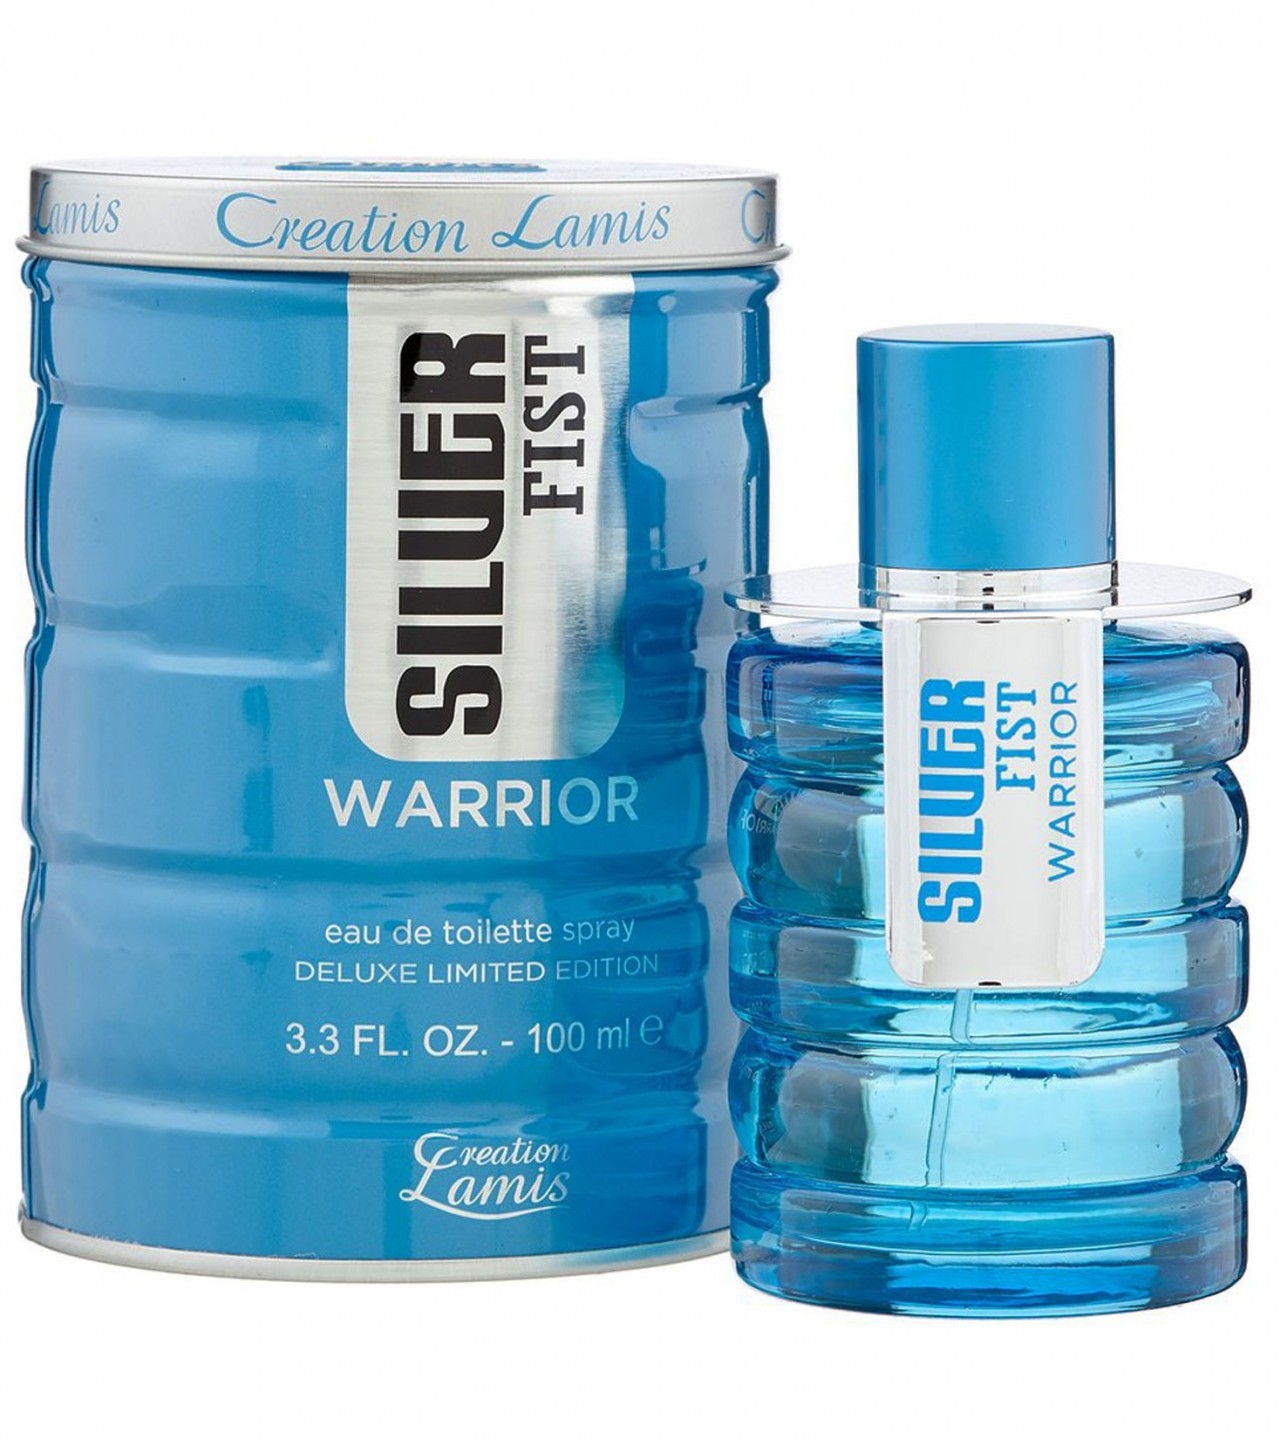 Creation Lamis Silver Fist Warrior Perfume For Men - 100 ml